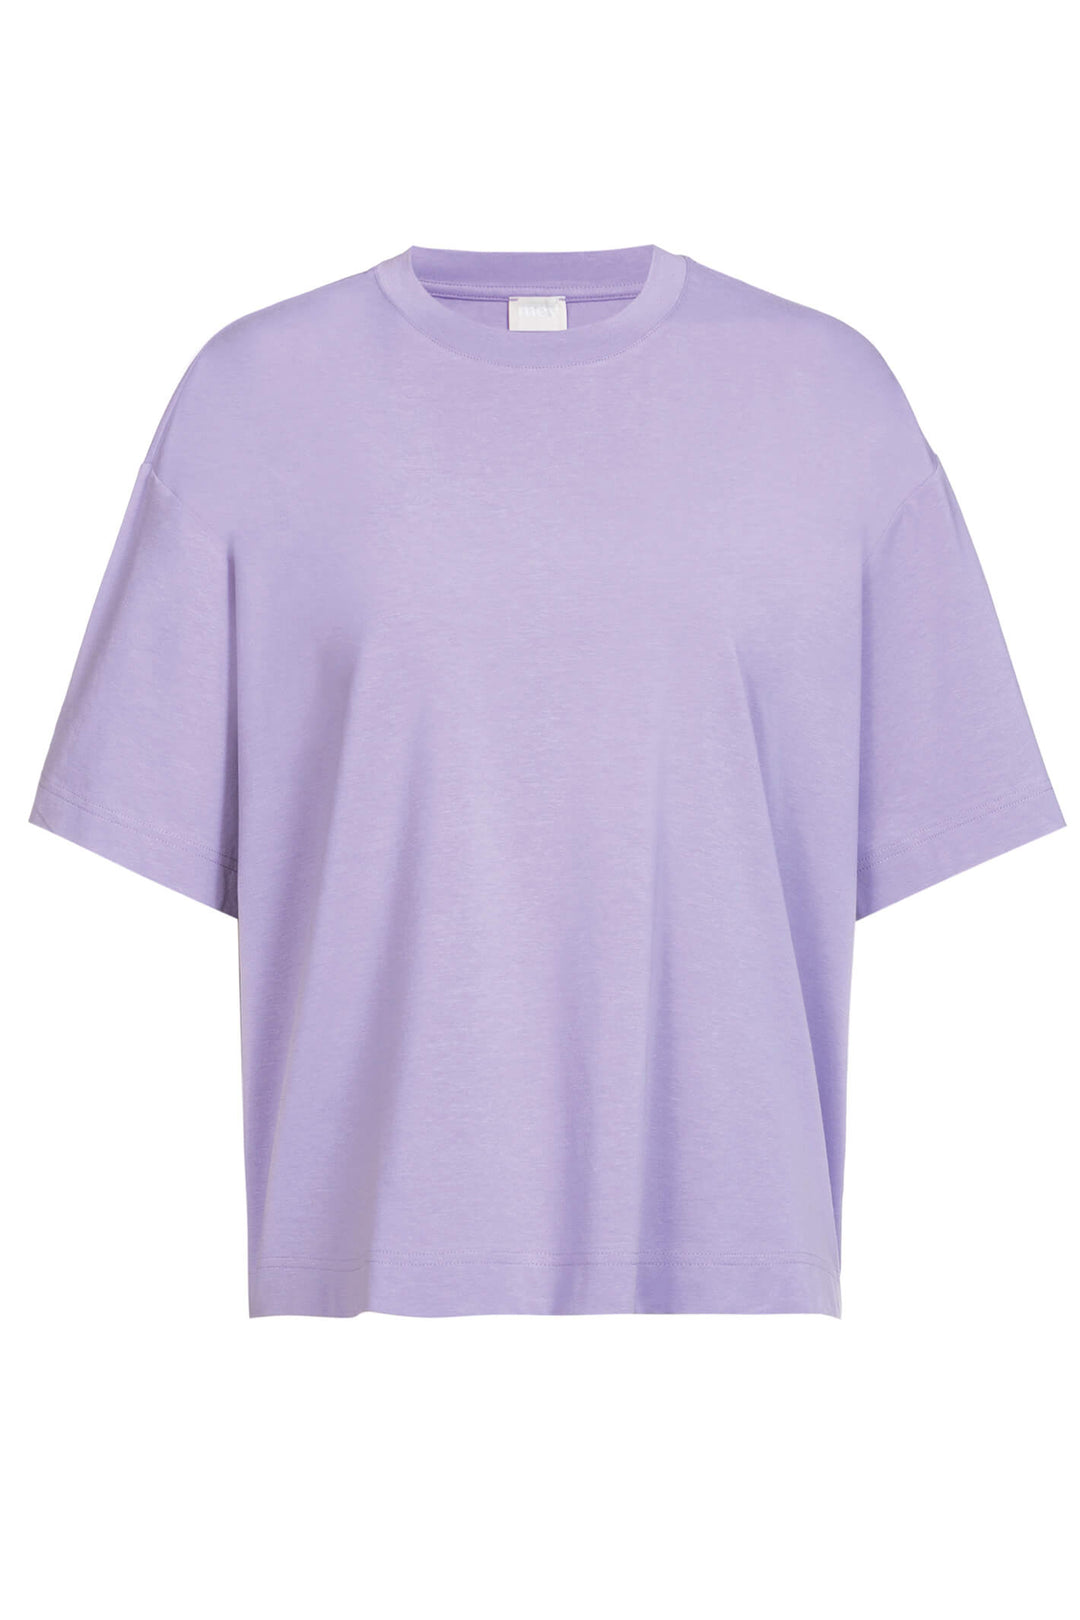 Mey 17404 197 Debby Lilac Sort Sleeve T-Shirt - Shirley Allum Boutique